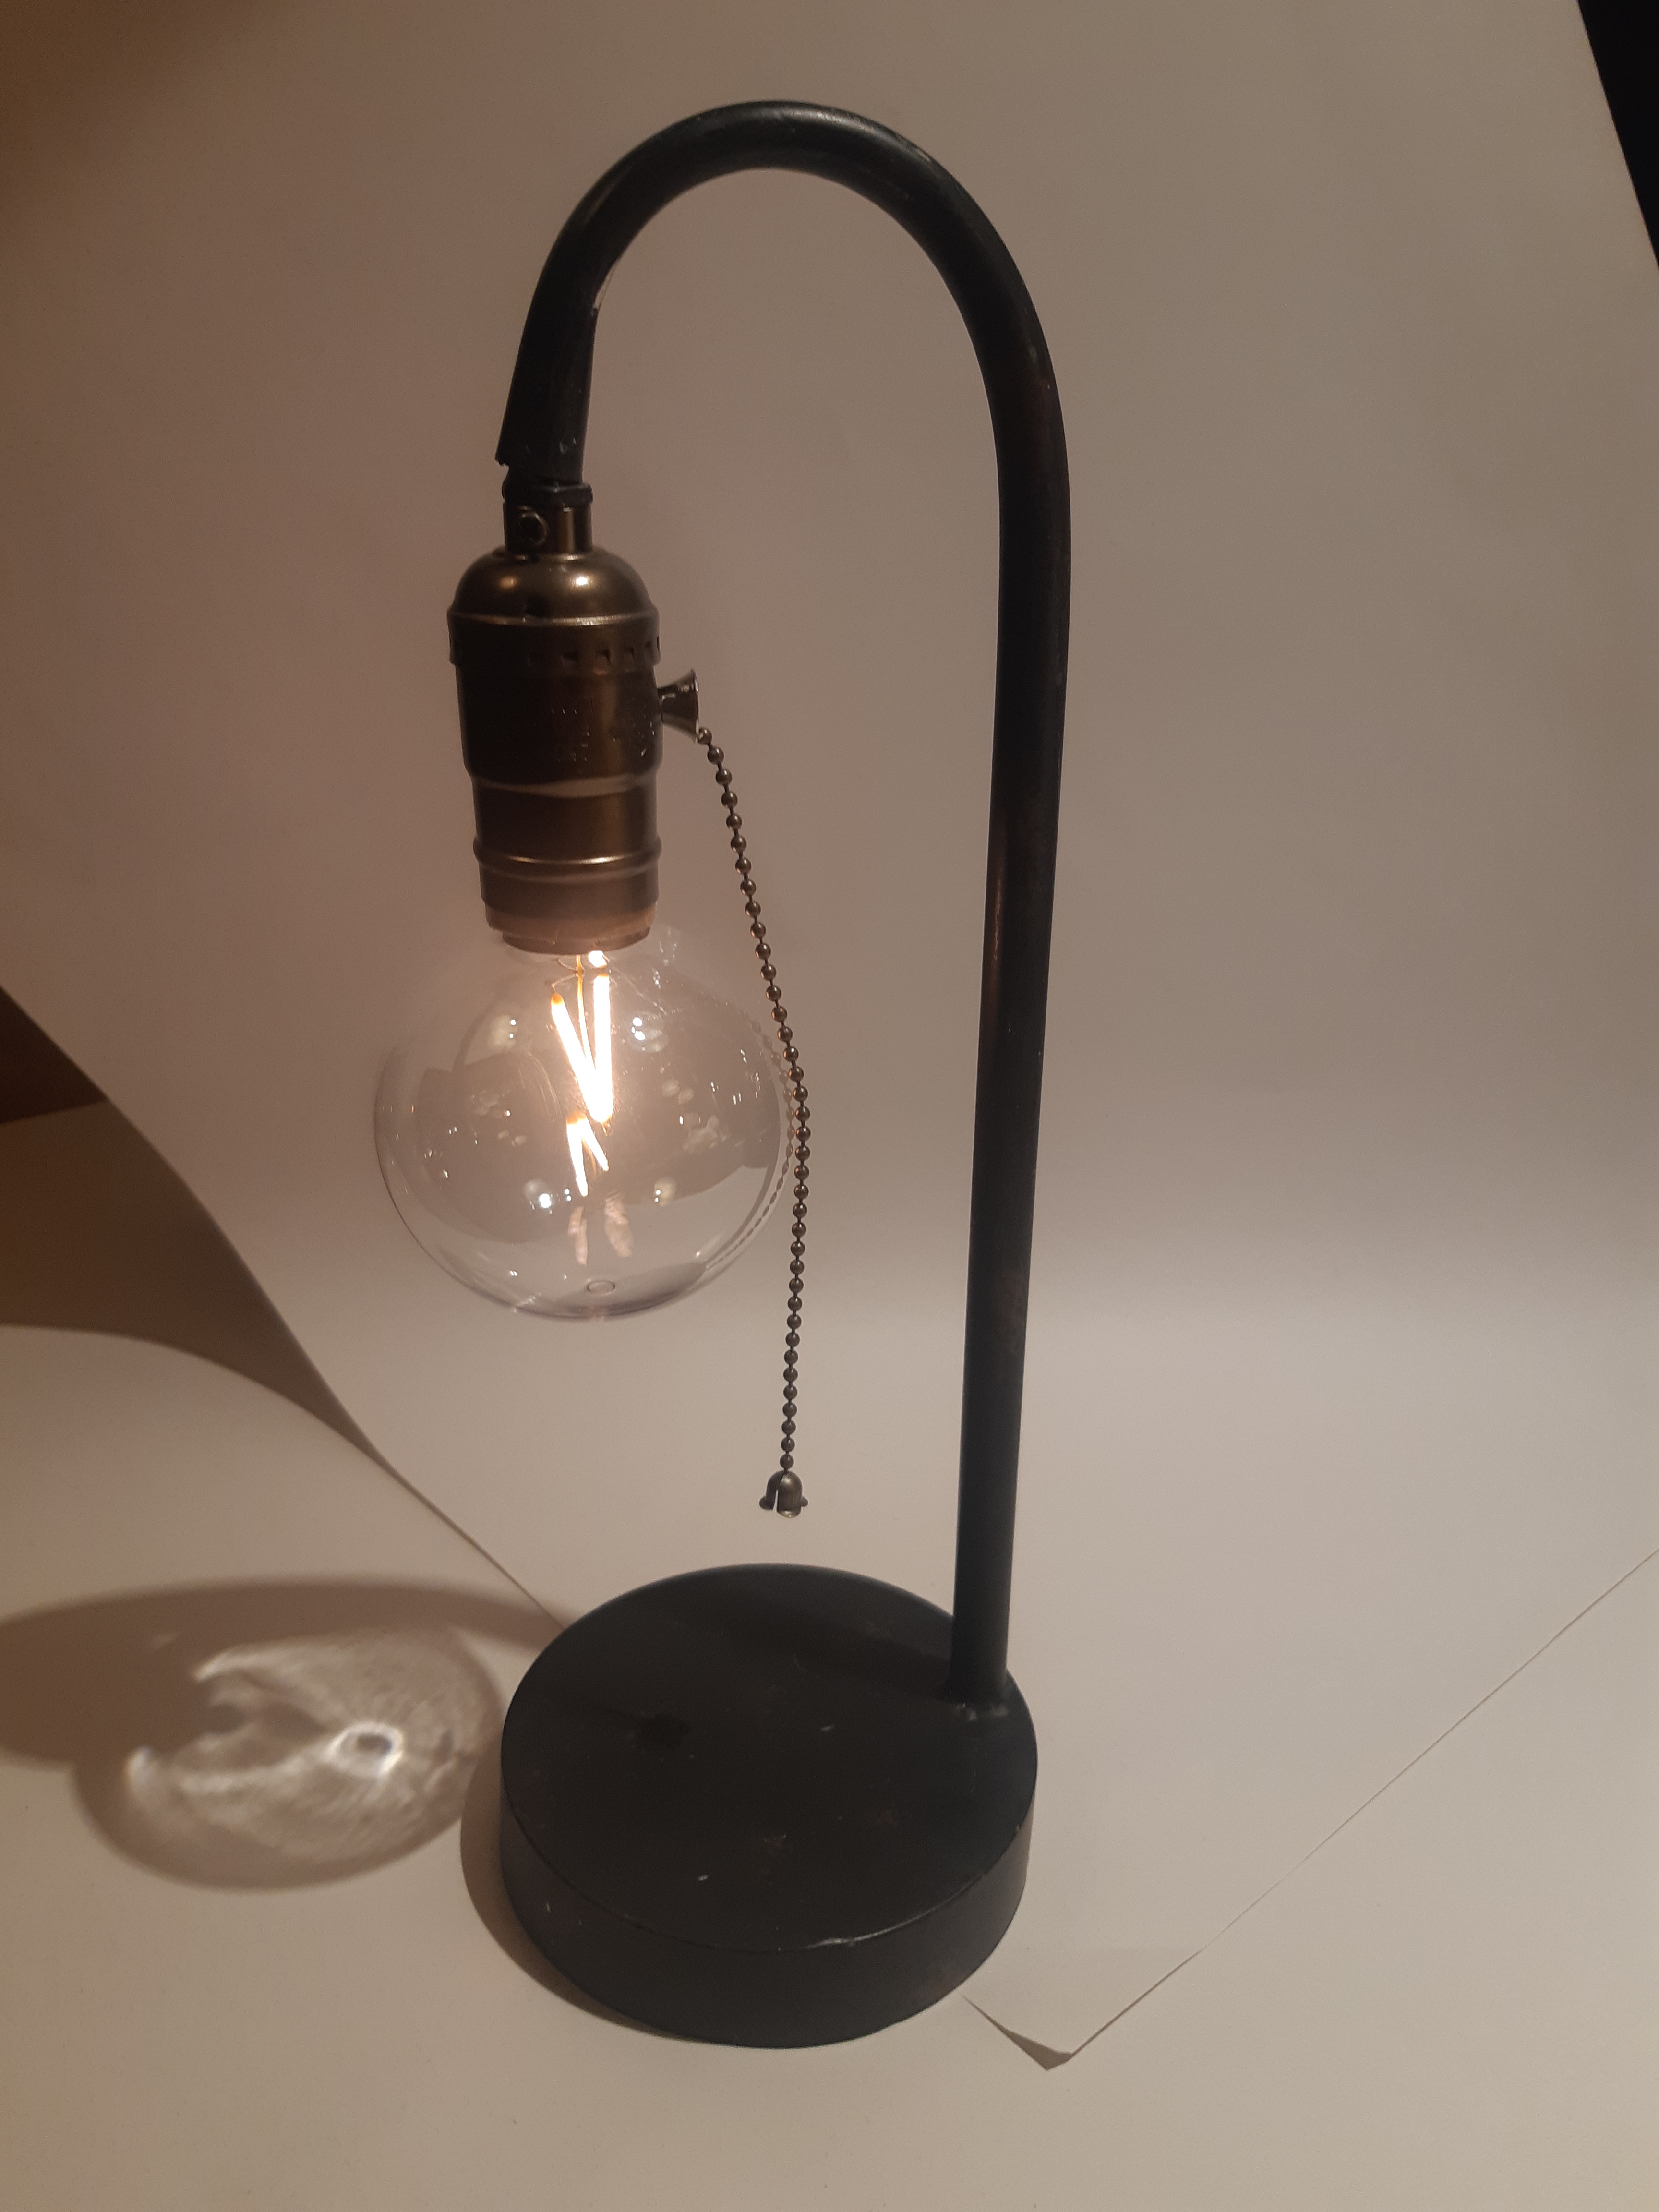 schade Sandalen biologie Led lamp op batterijen 38cm hoog